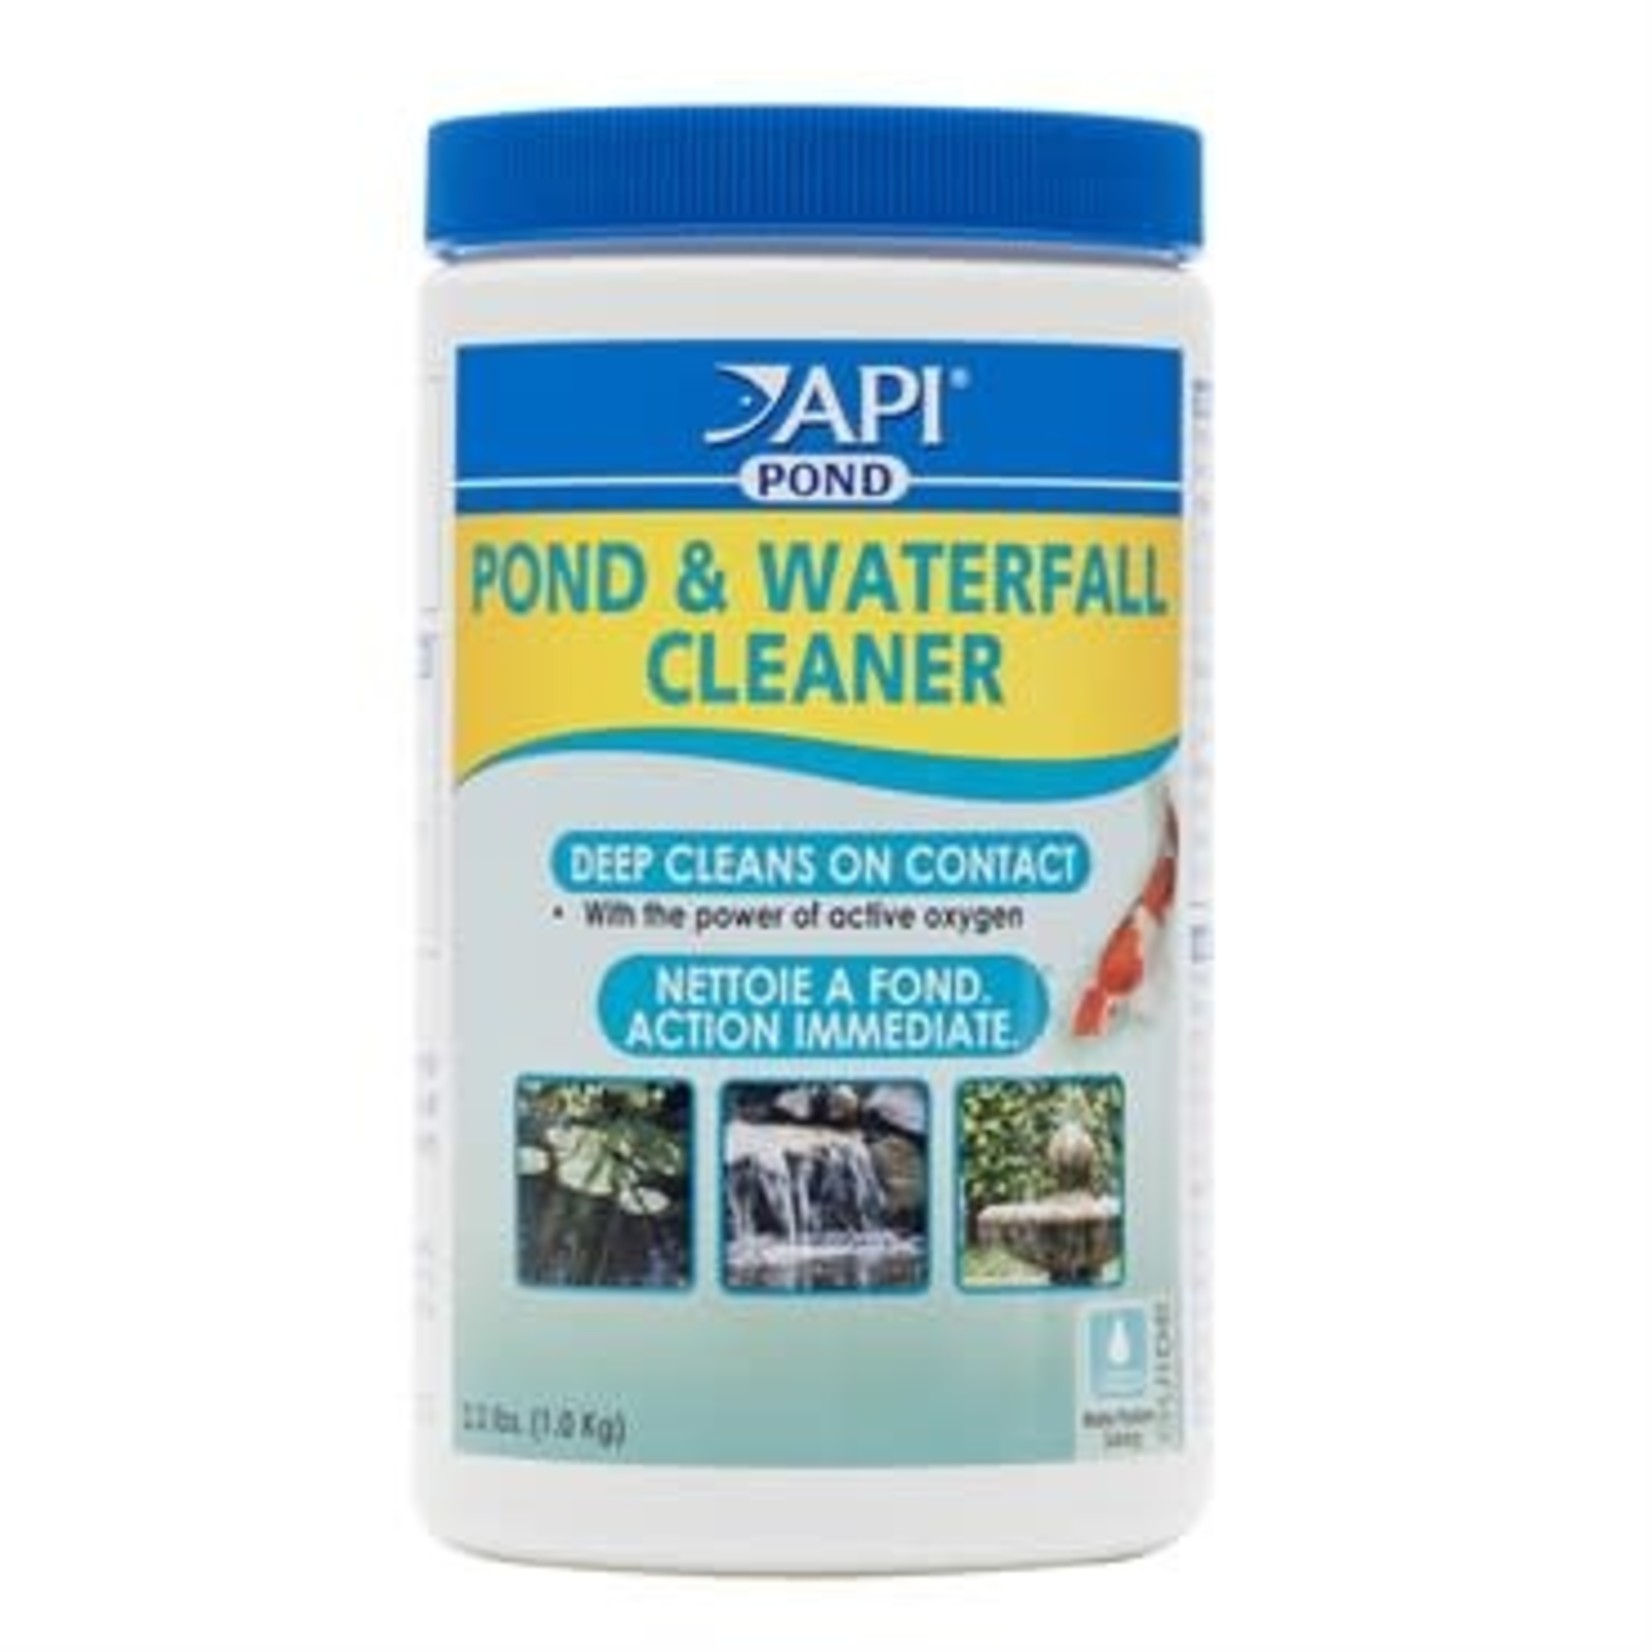 API Pond API Pond 2.2# Pond & Waterfall Cleaner